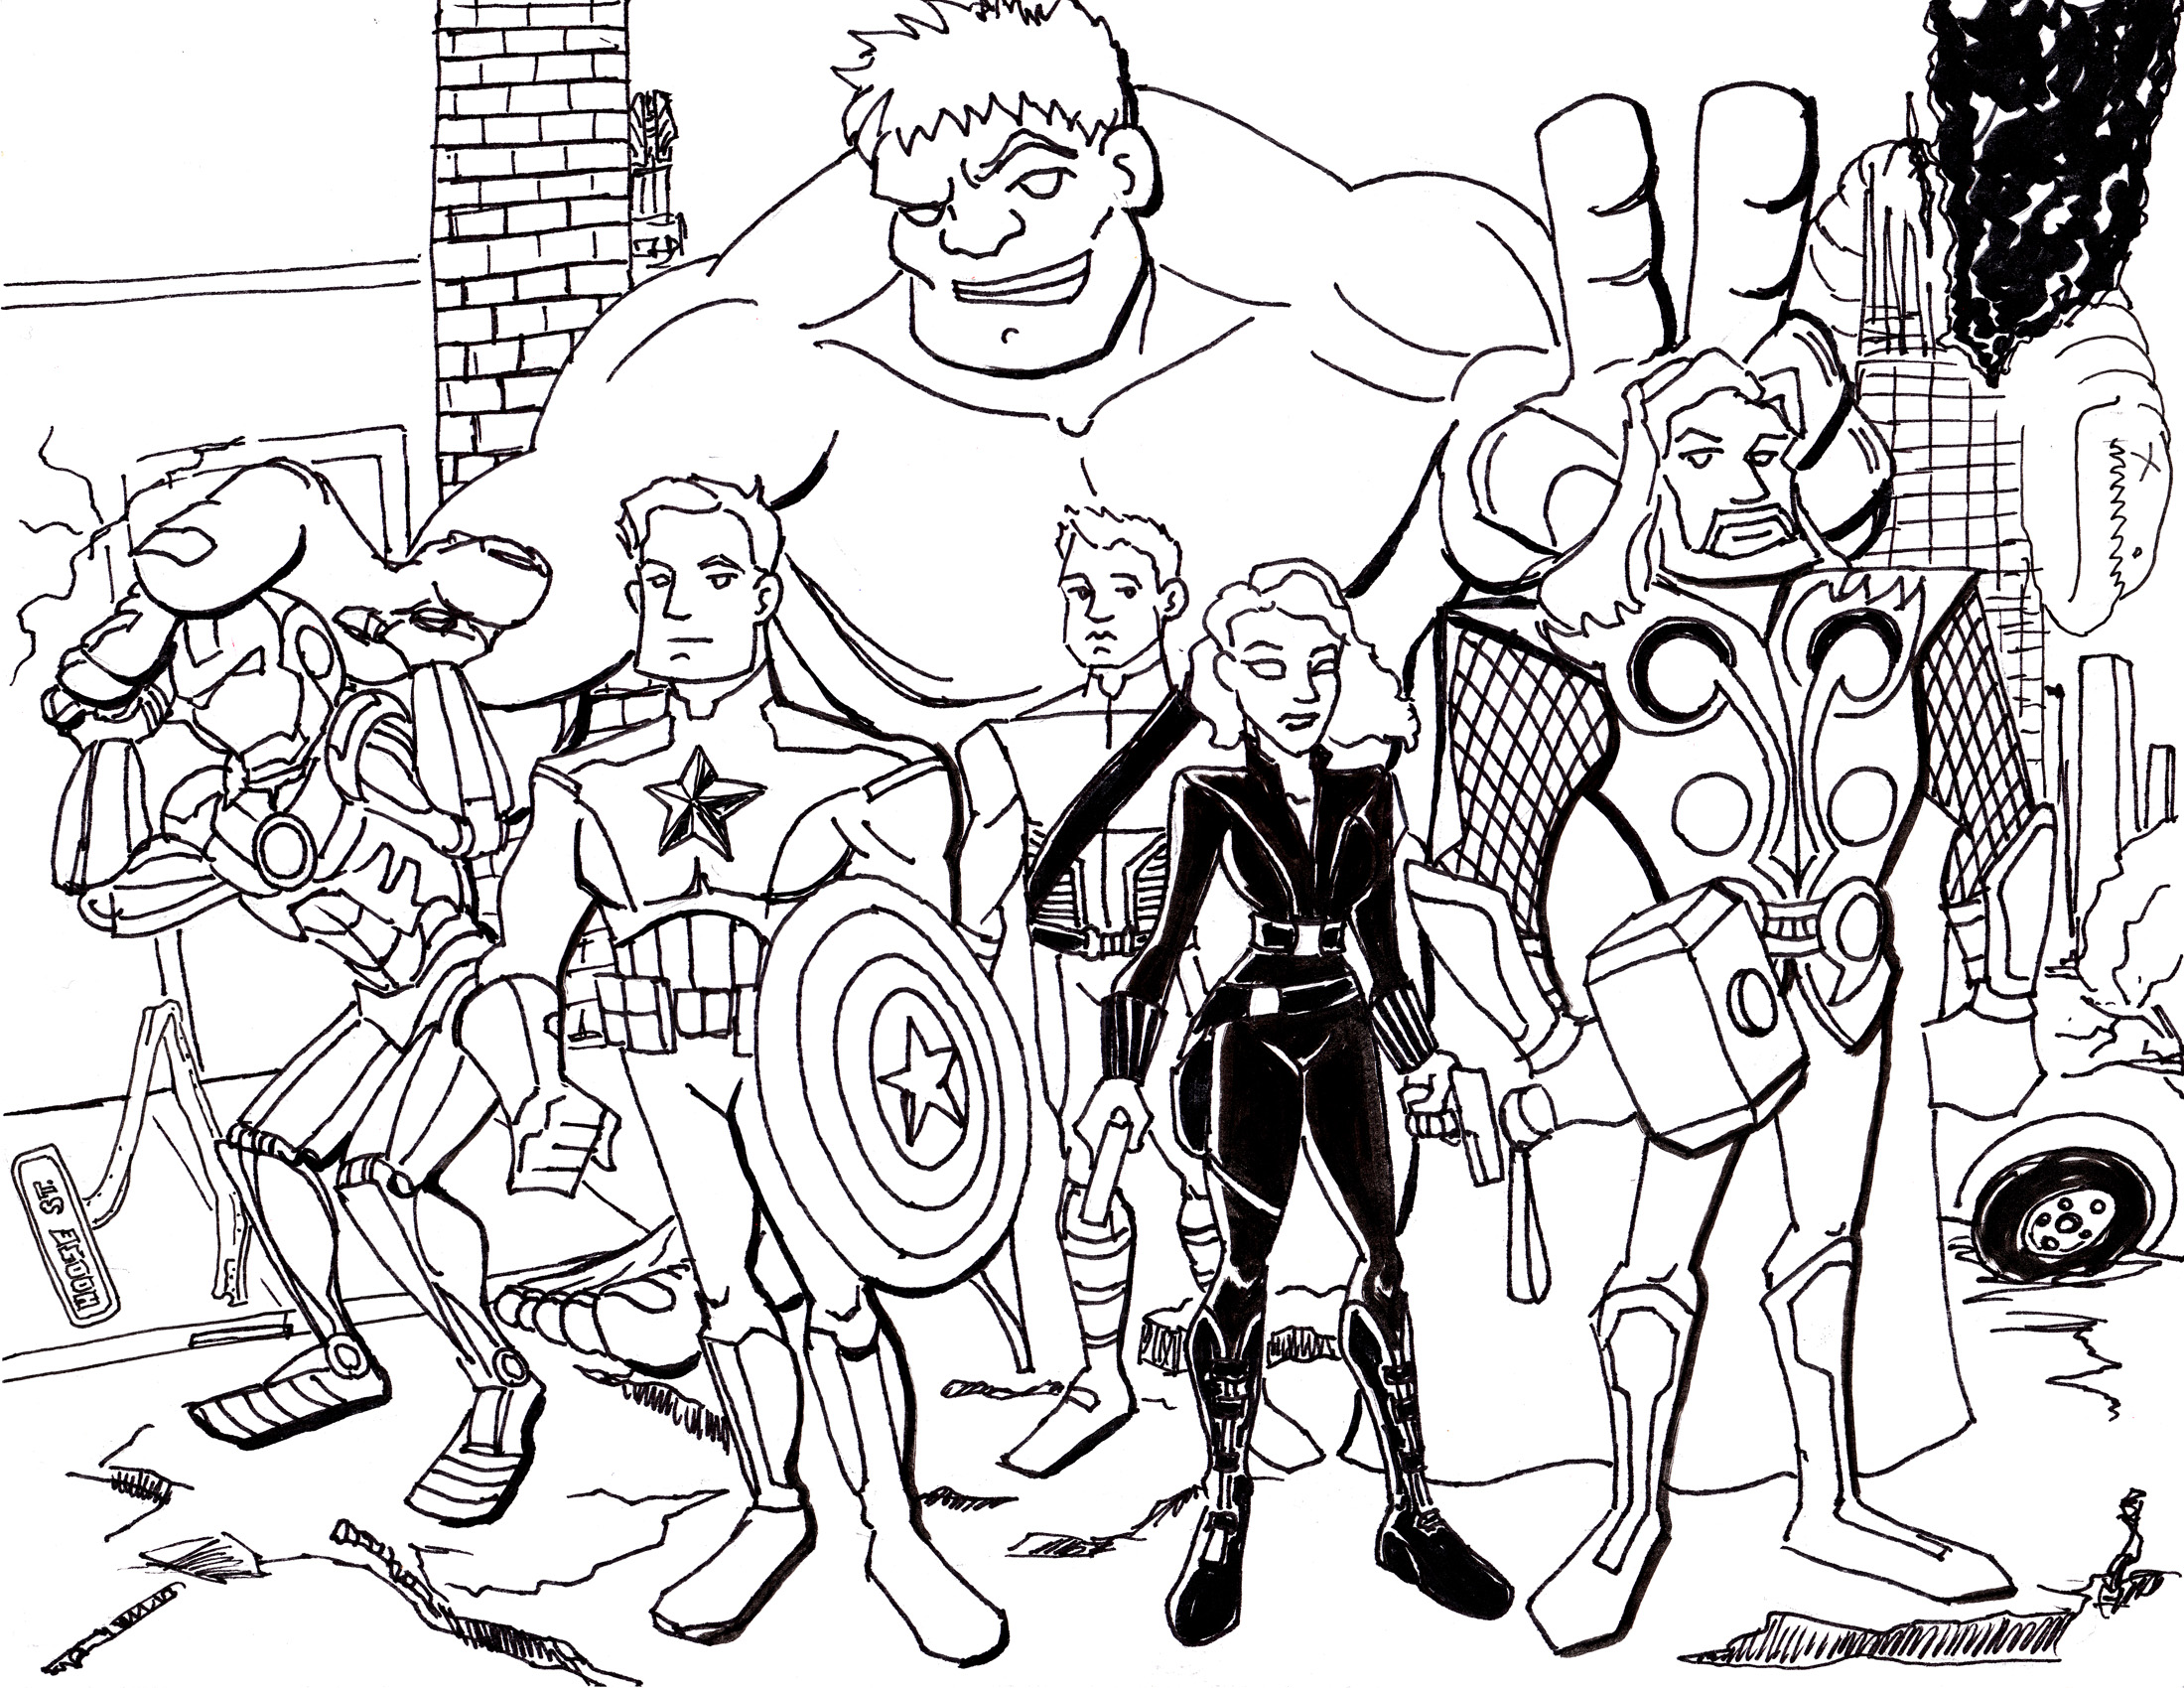 Dibujos Brunei - Inking the original six Avengers. My cartoon version. # avengers #marvel #theavengers #ironman #banner #thor #blackwidow  #captainamerica #cap #hawkeye #endgame #infinitywar #dibujos #drawing #art  #instaart #ilustration #ilustracion ...